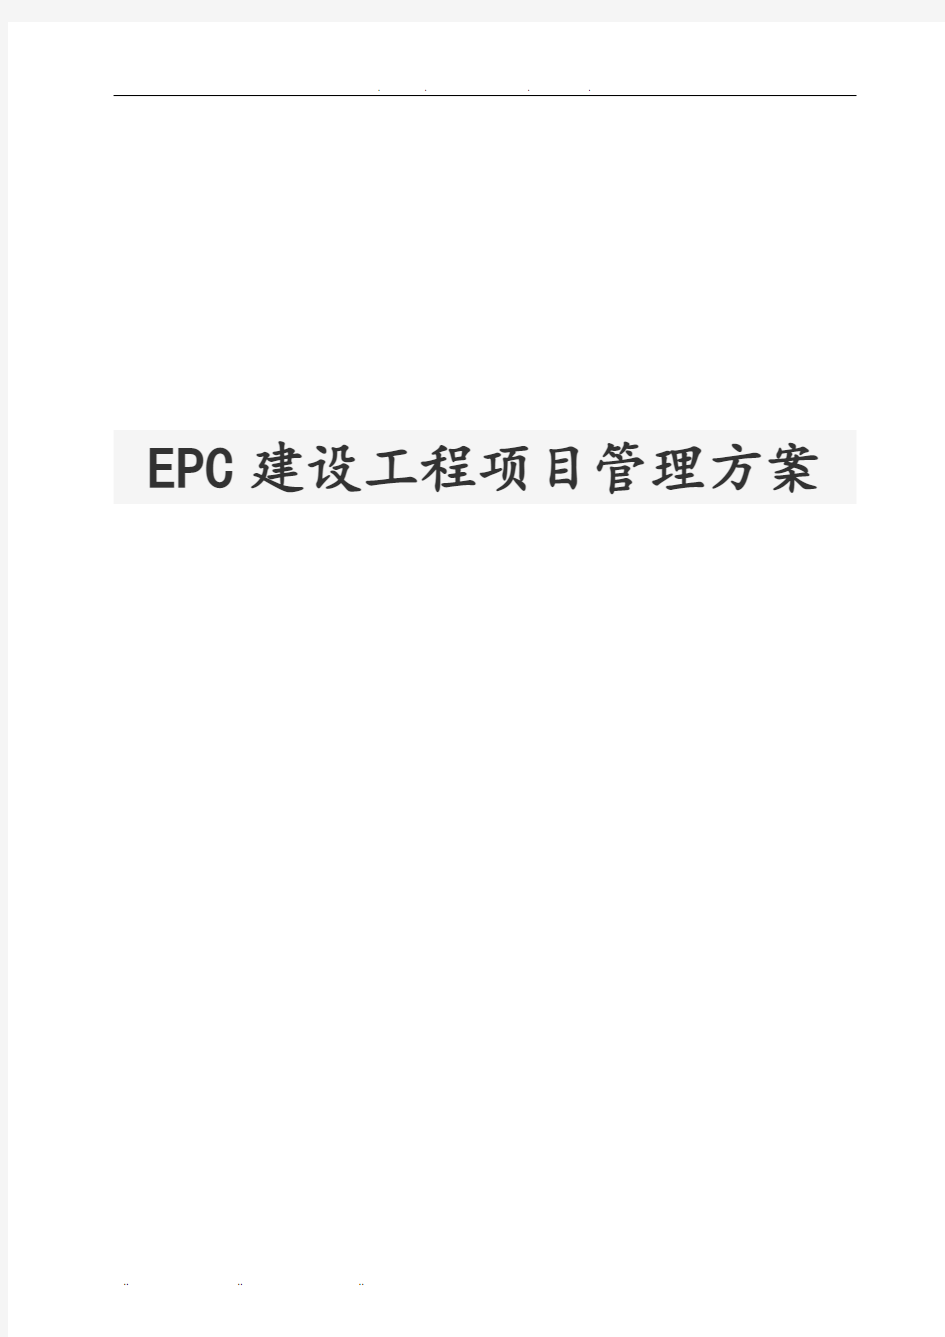 EPC建设工程项目管理方案说明